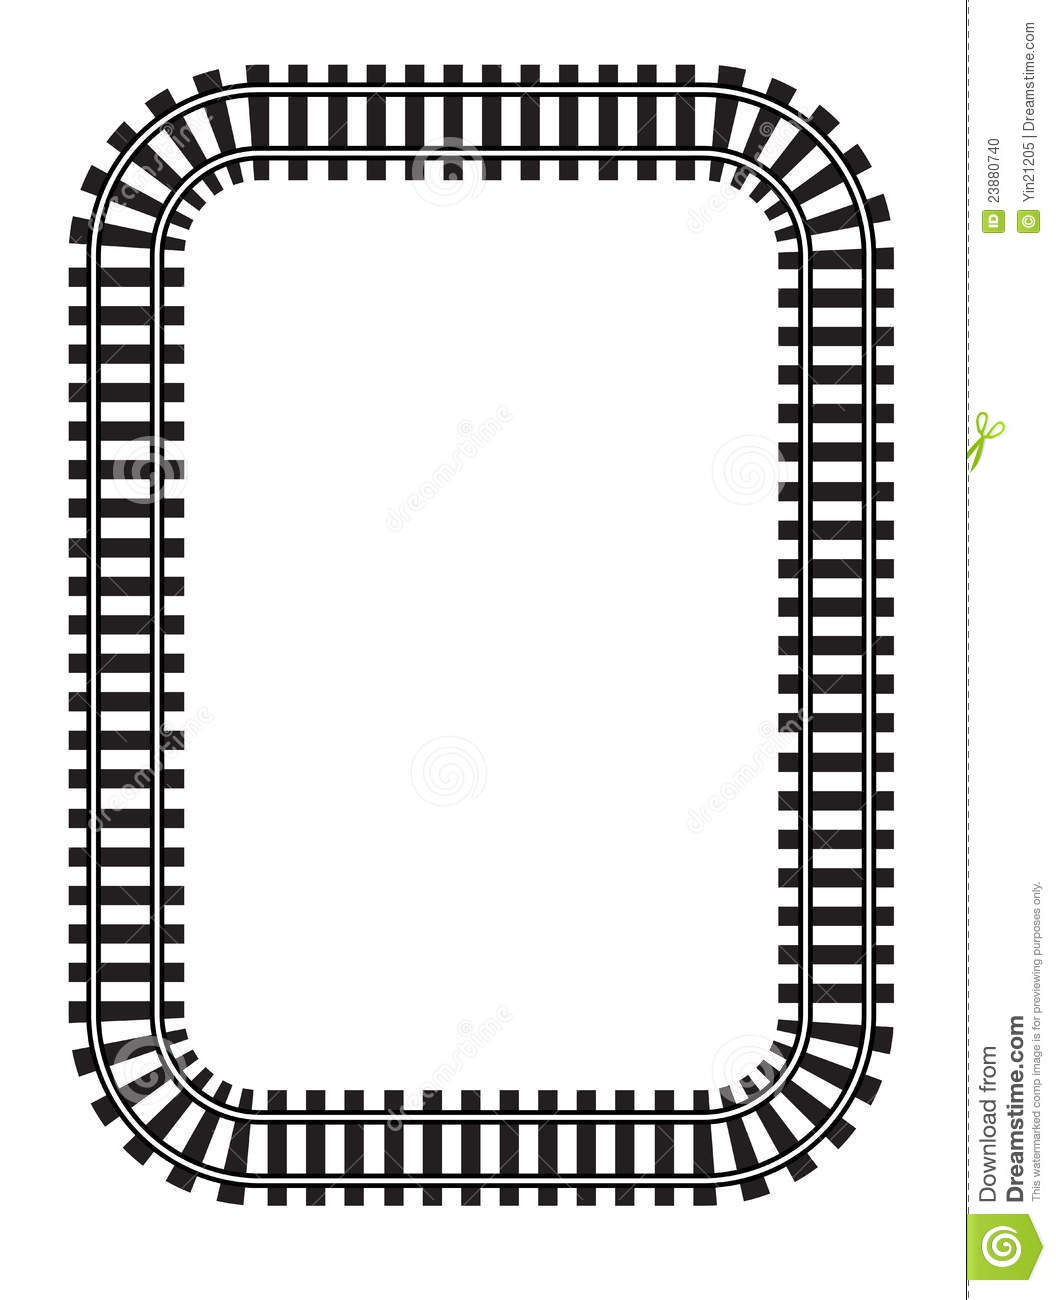 Train Tracks Clipart - Blogsb